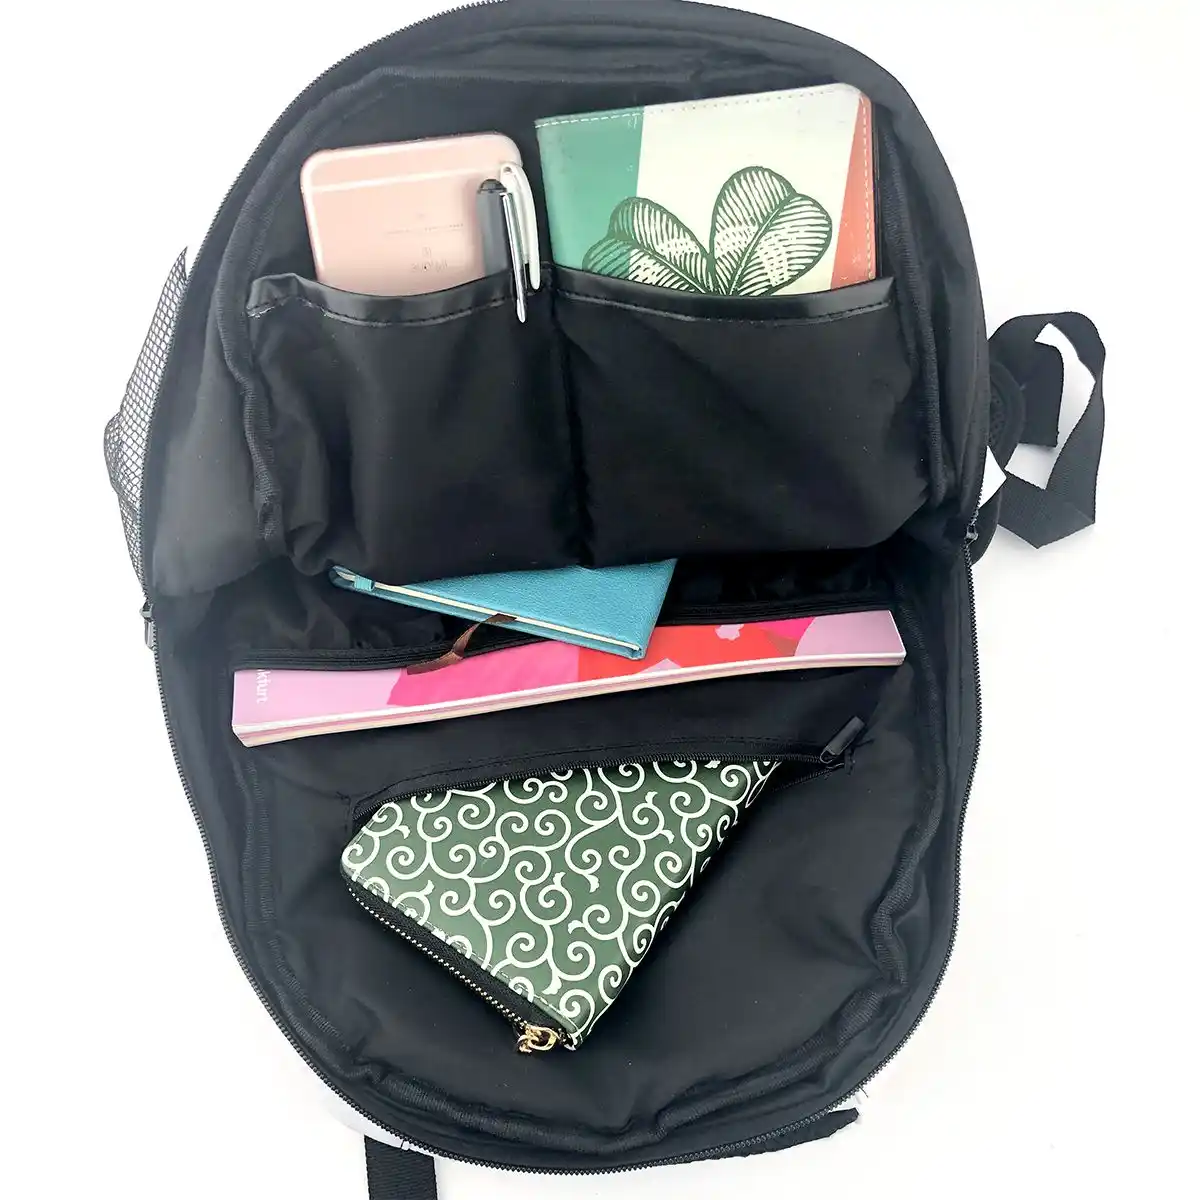 Gh-Ost of Tsushima School Backpack Bookbag Casual Daypack Travel Laptop Backpack for Girls Women Teenagers Black 